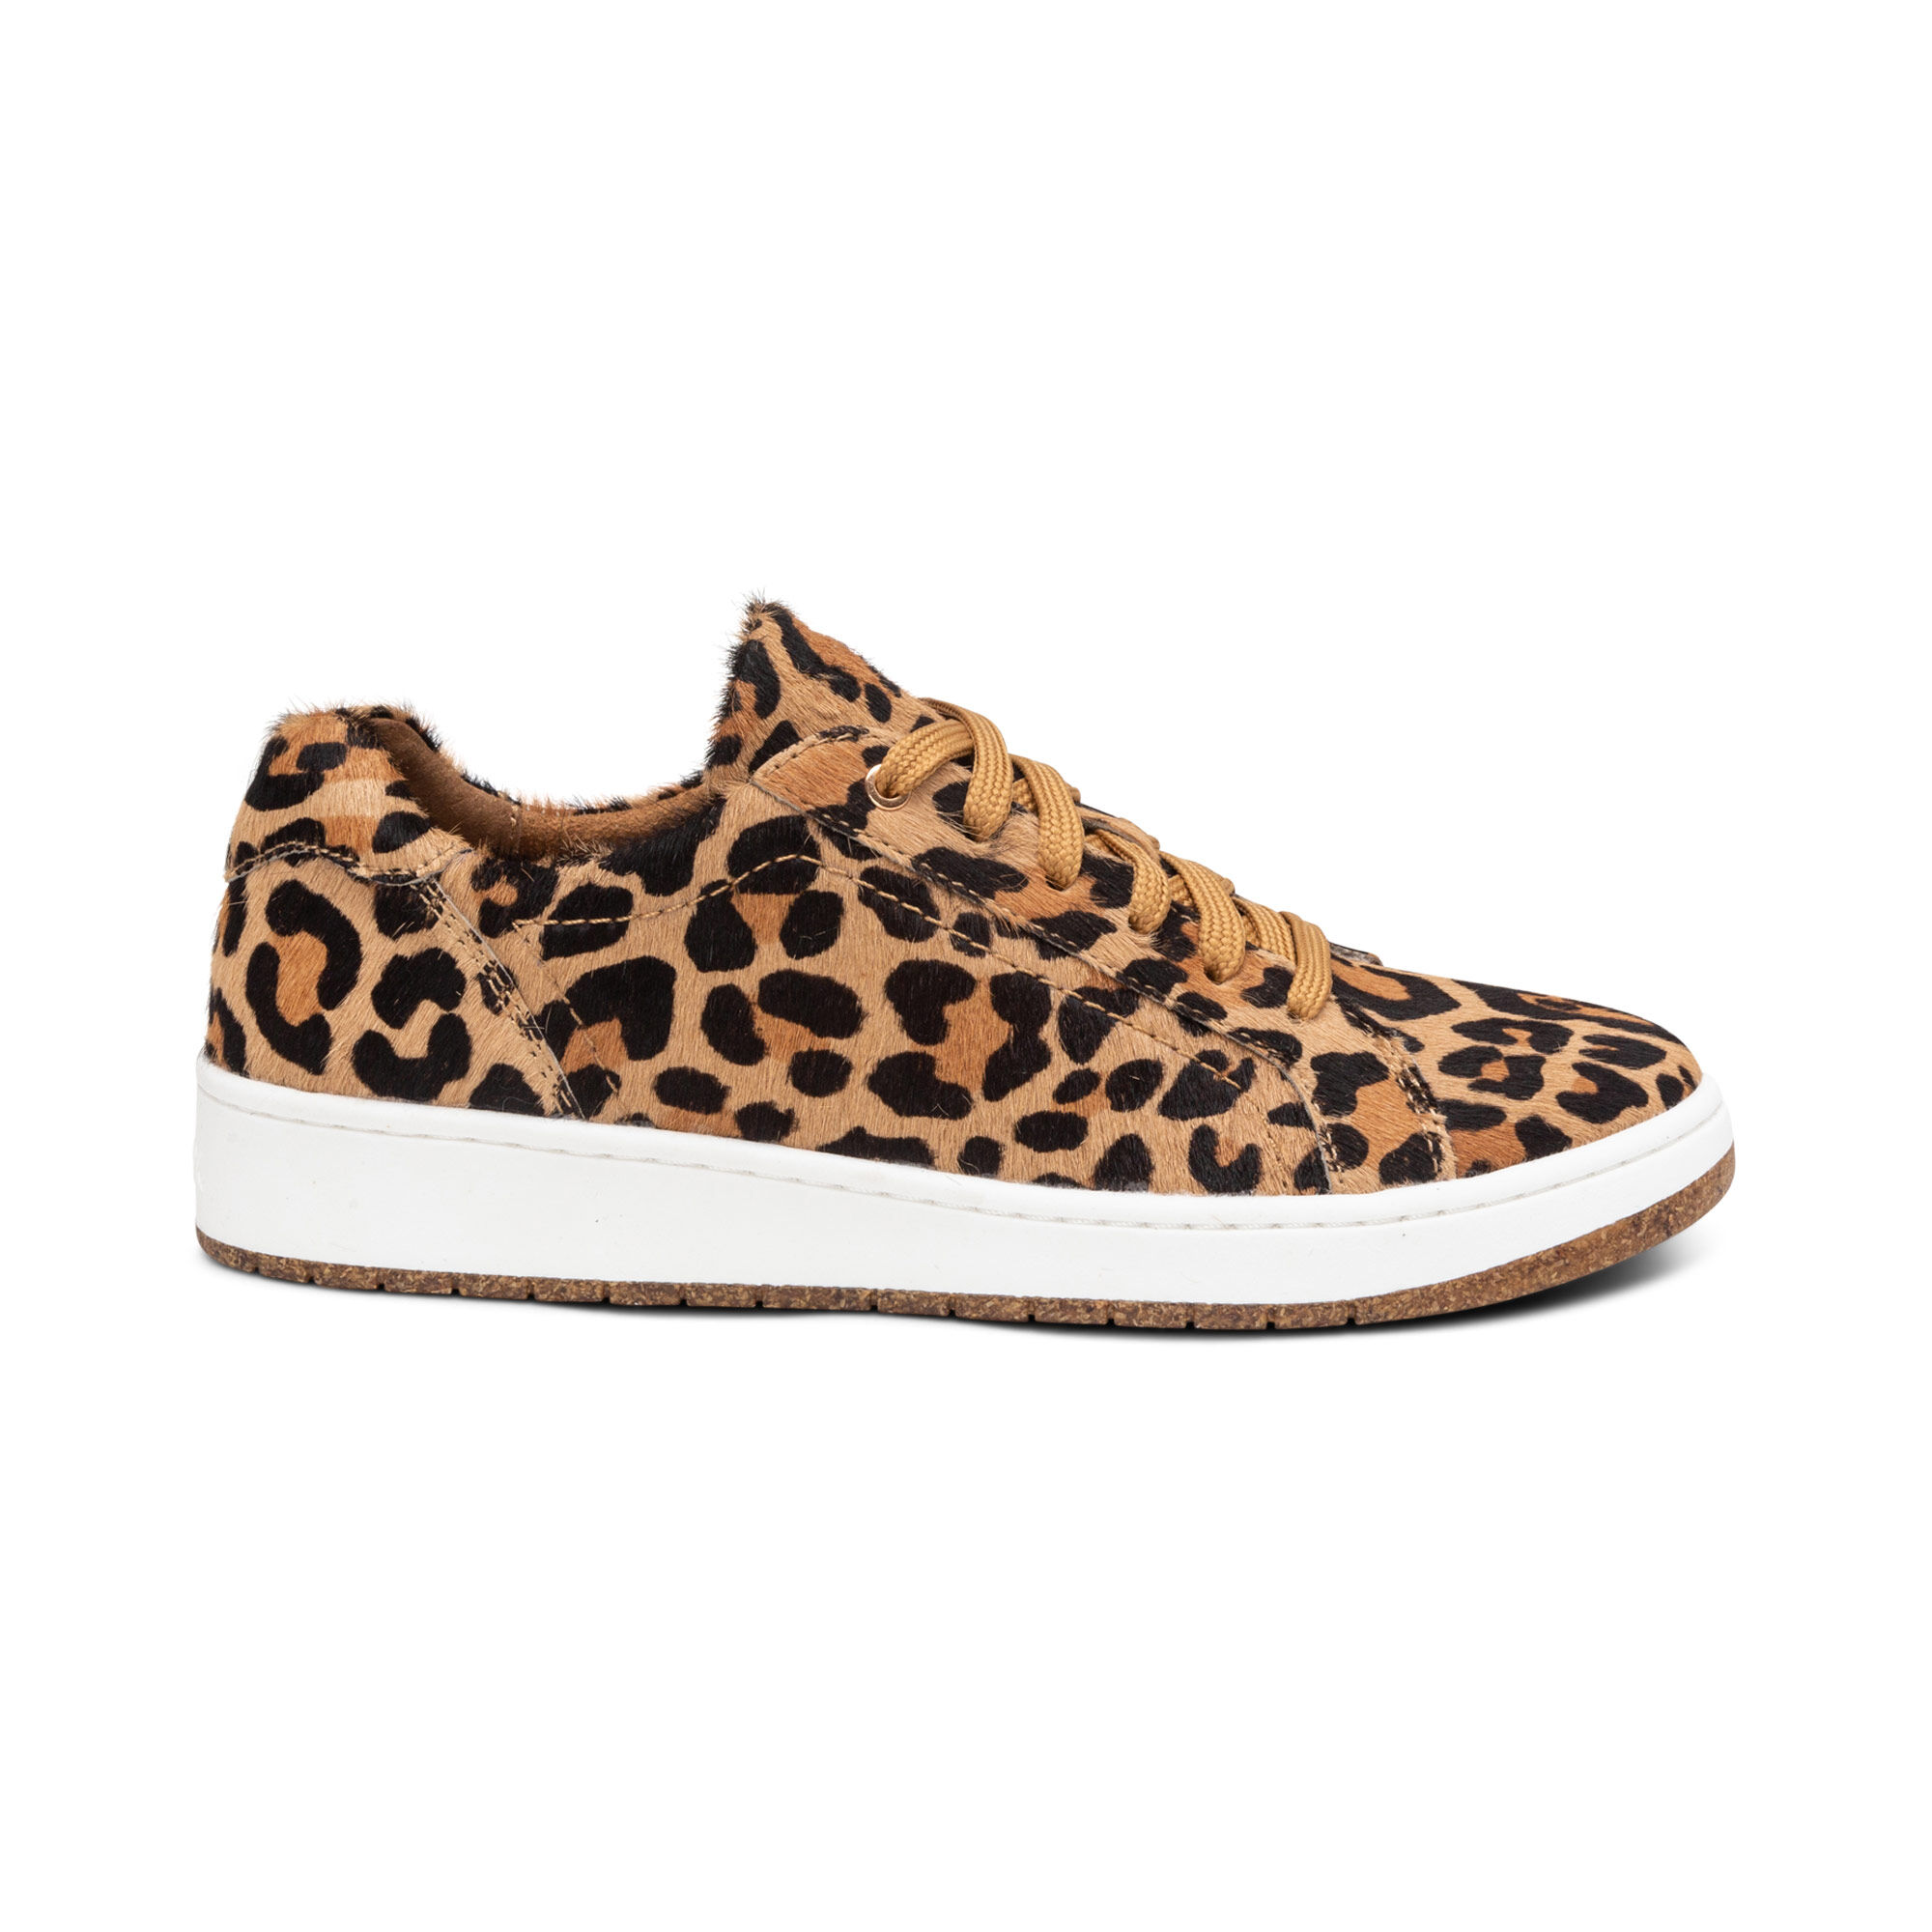 Saint Laurent Women's Venice Leopard Print Low Top Sneakers | Bloomingdale's